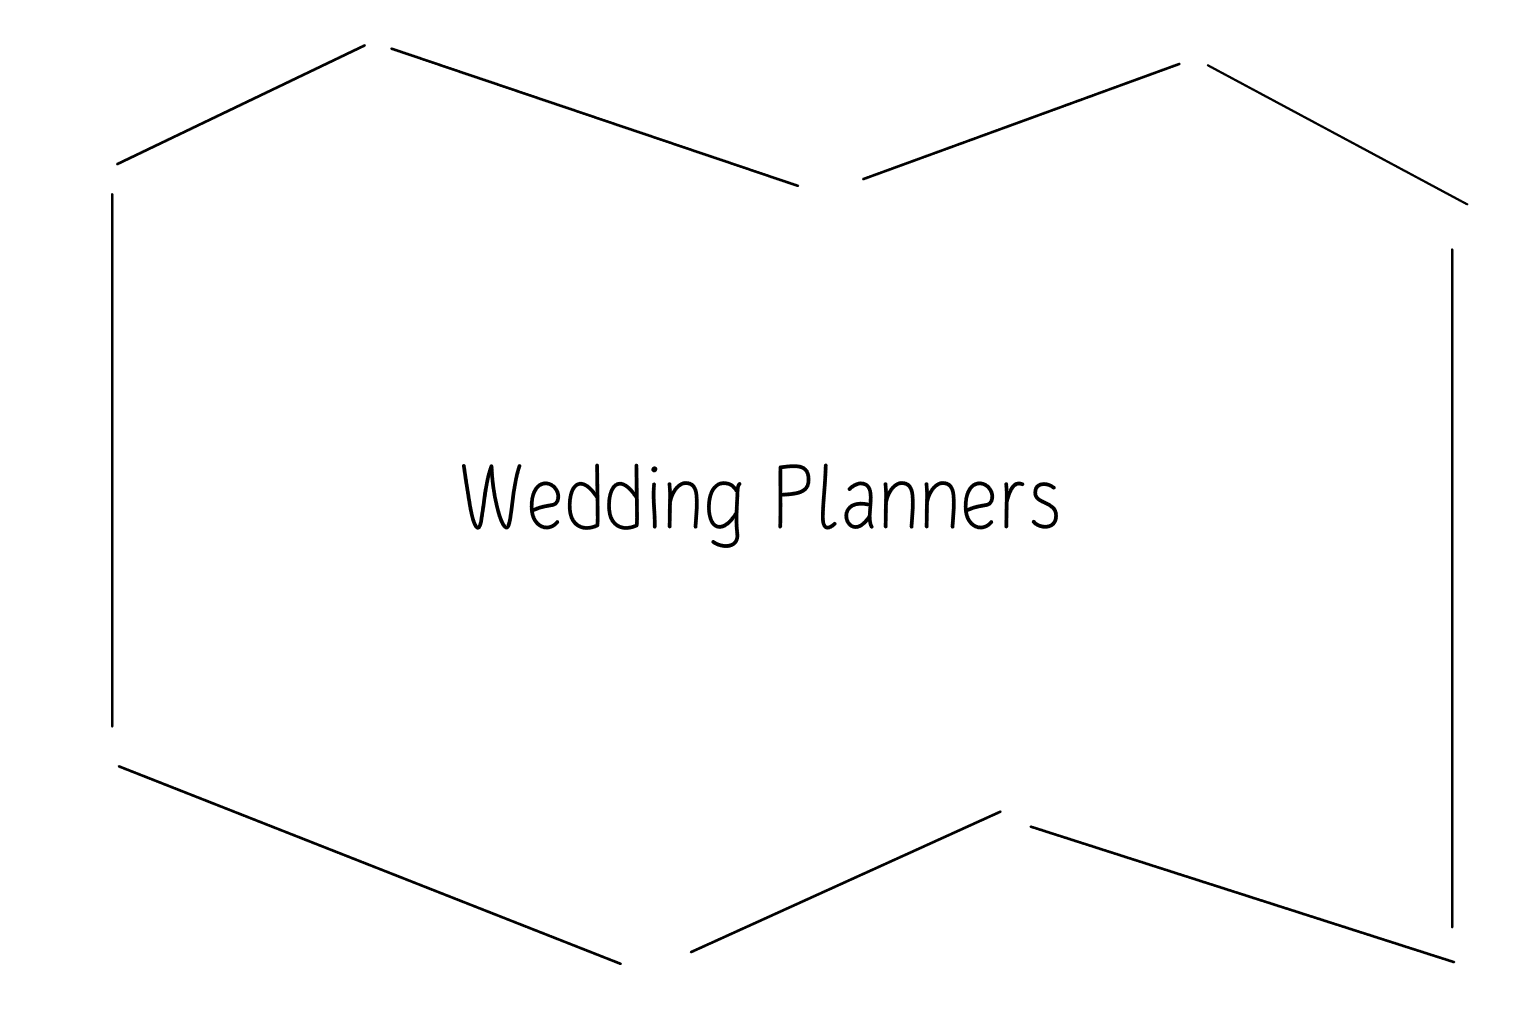 Illustration of wedding planners